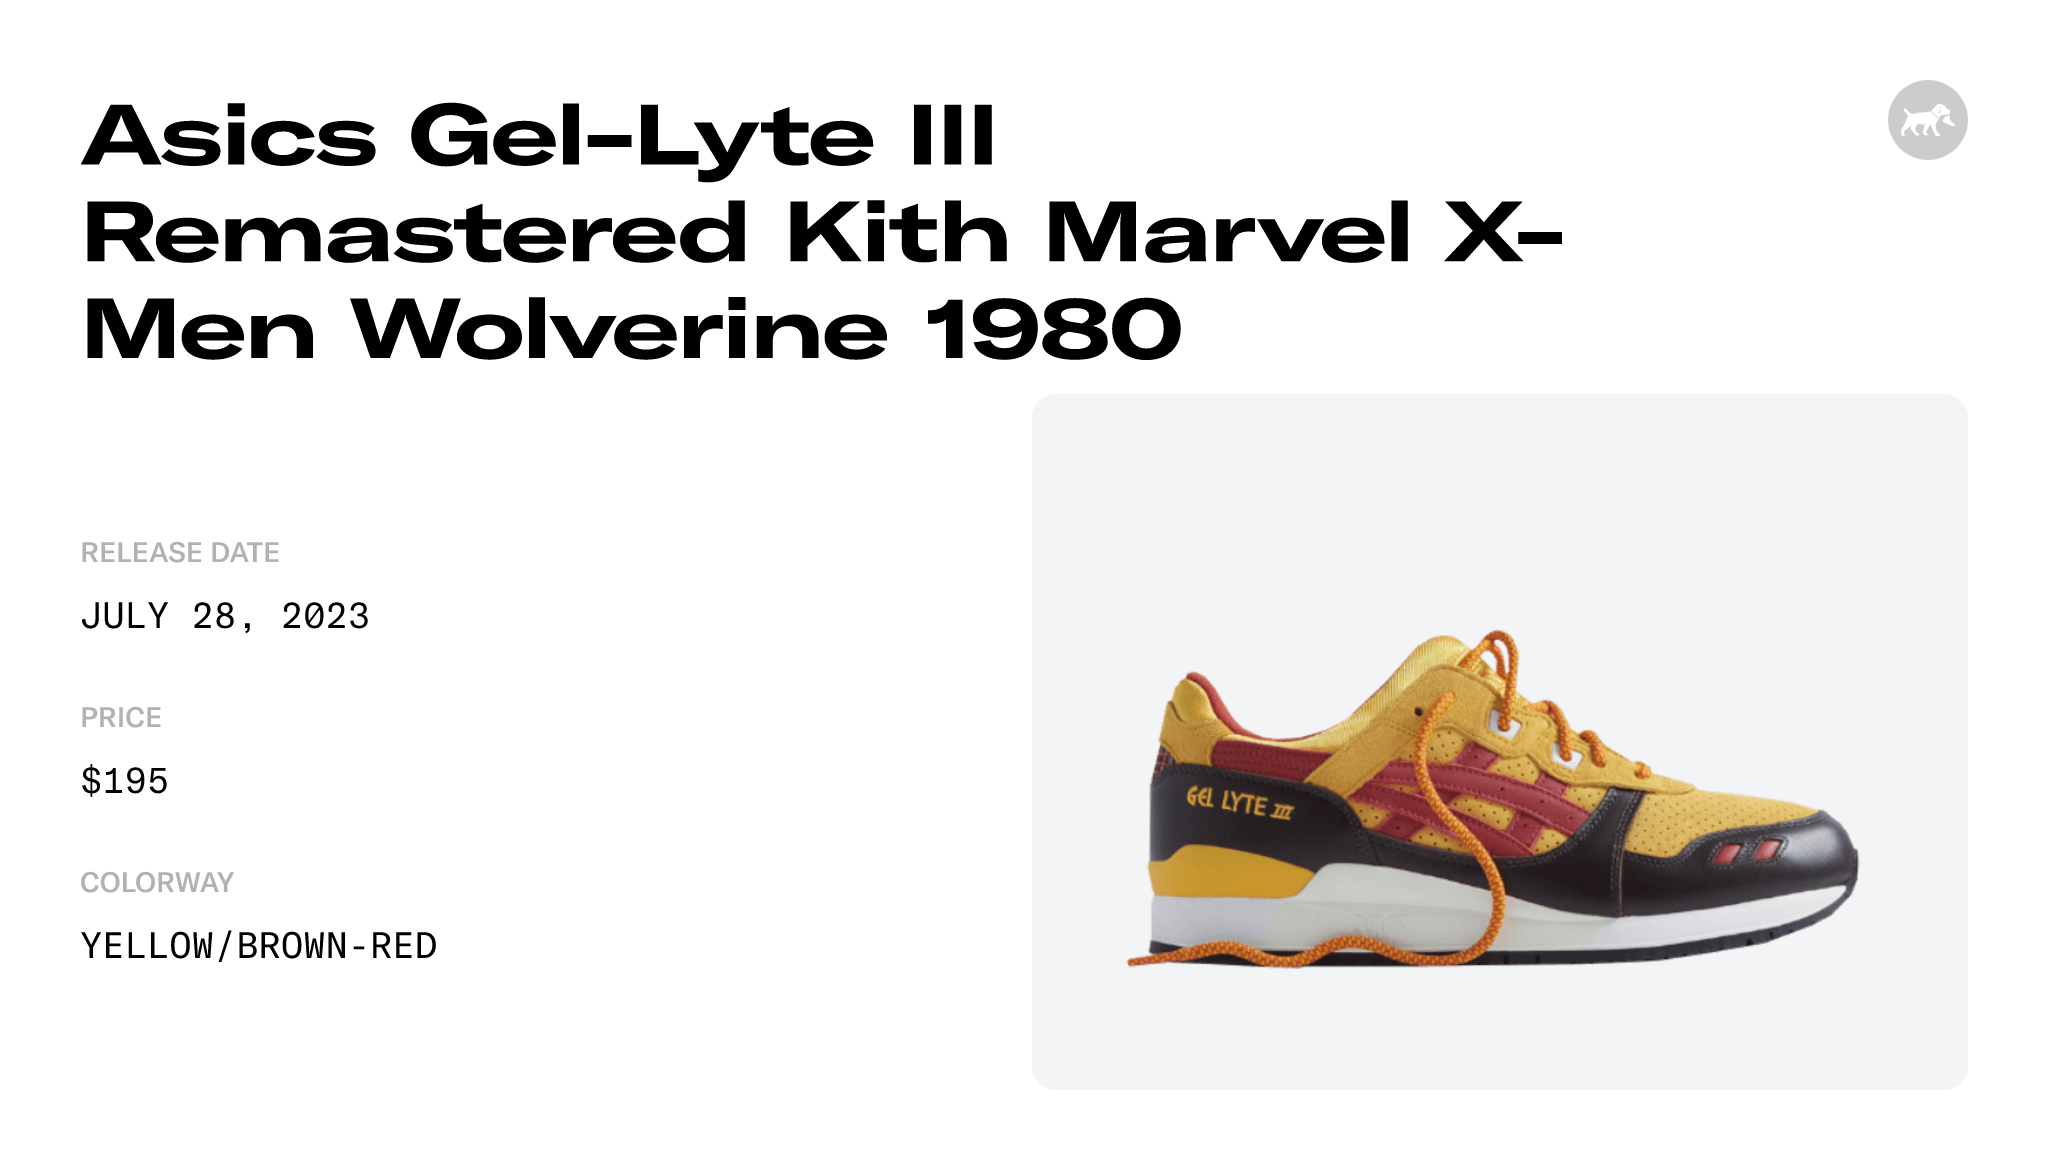 Asics Gel-Lyte III Remastered Kith Marvel X-Men Wolverine 1980